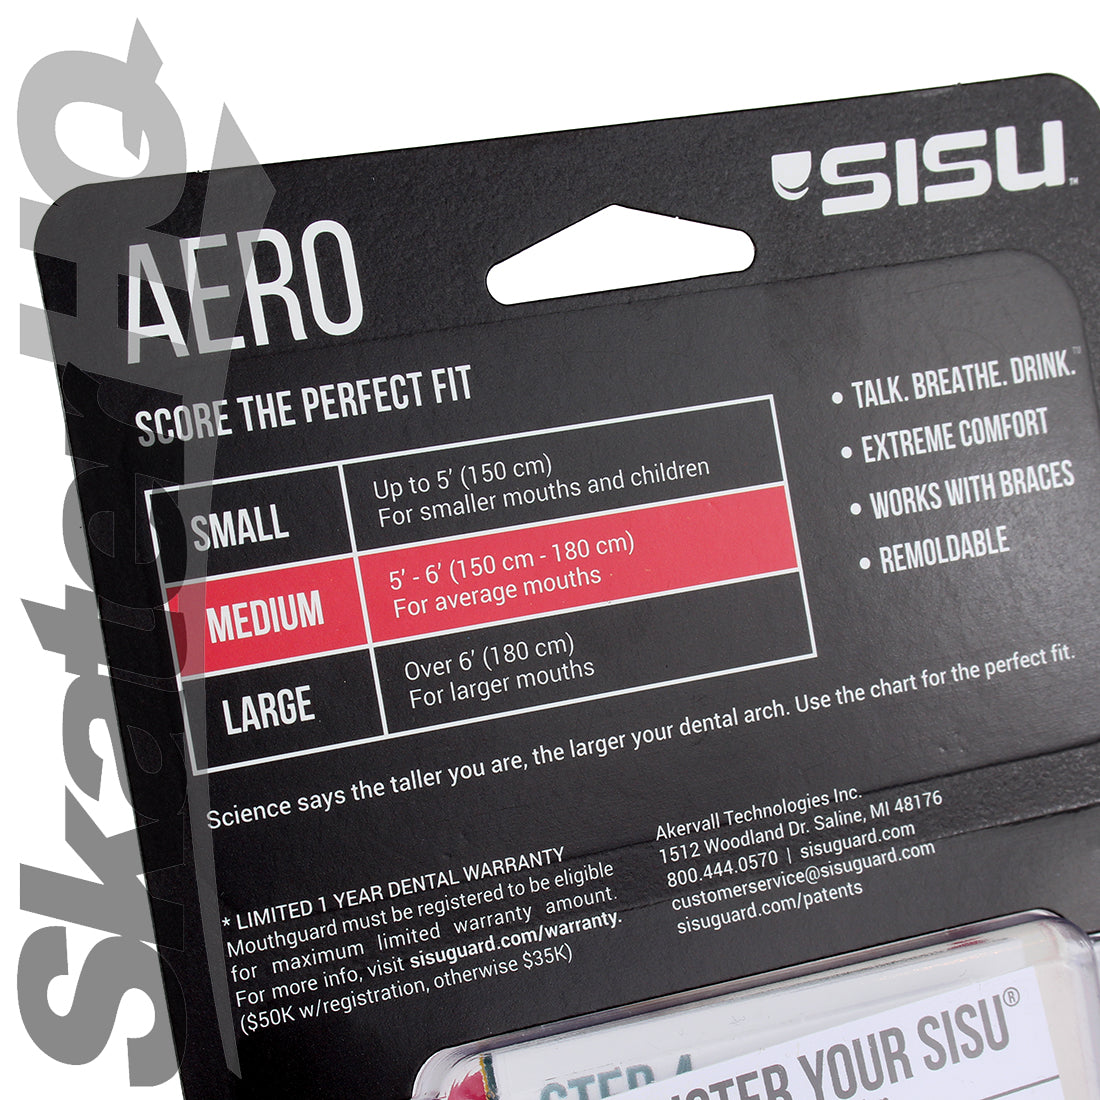 SISU AERO Mouthguard 1.6 Medium - Hot Pink Protective Mouthguards